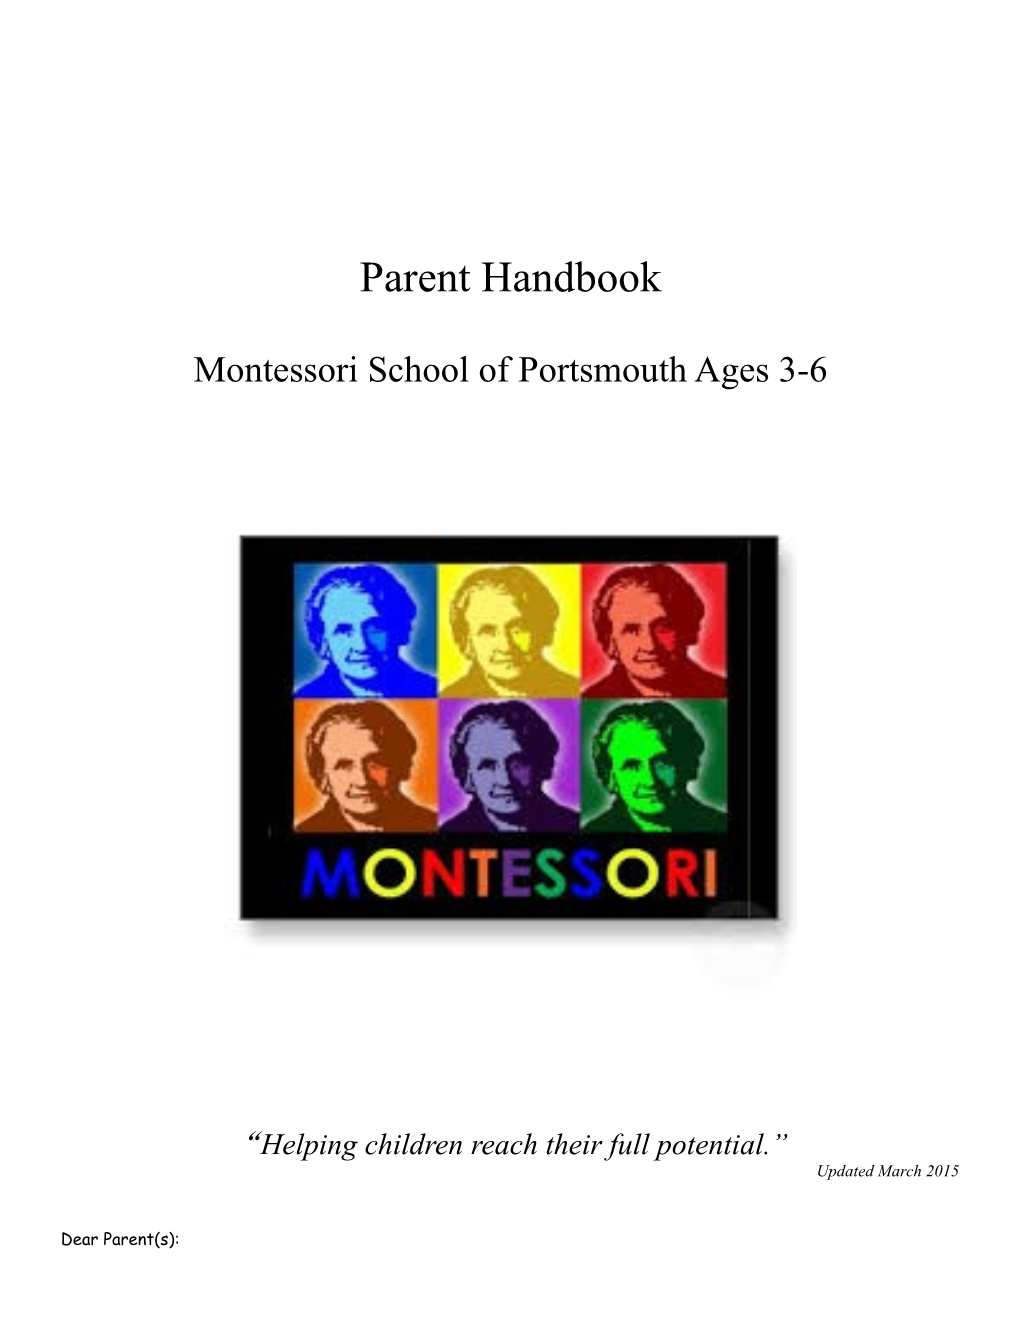 Montessori School of Portsmouth Ages 3-6